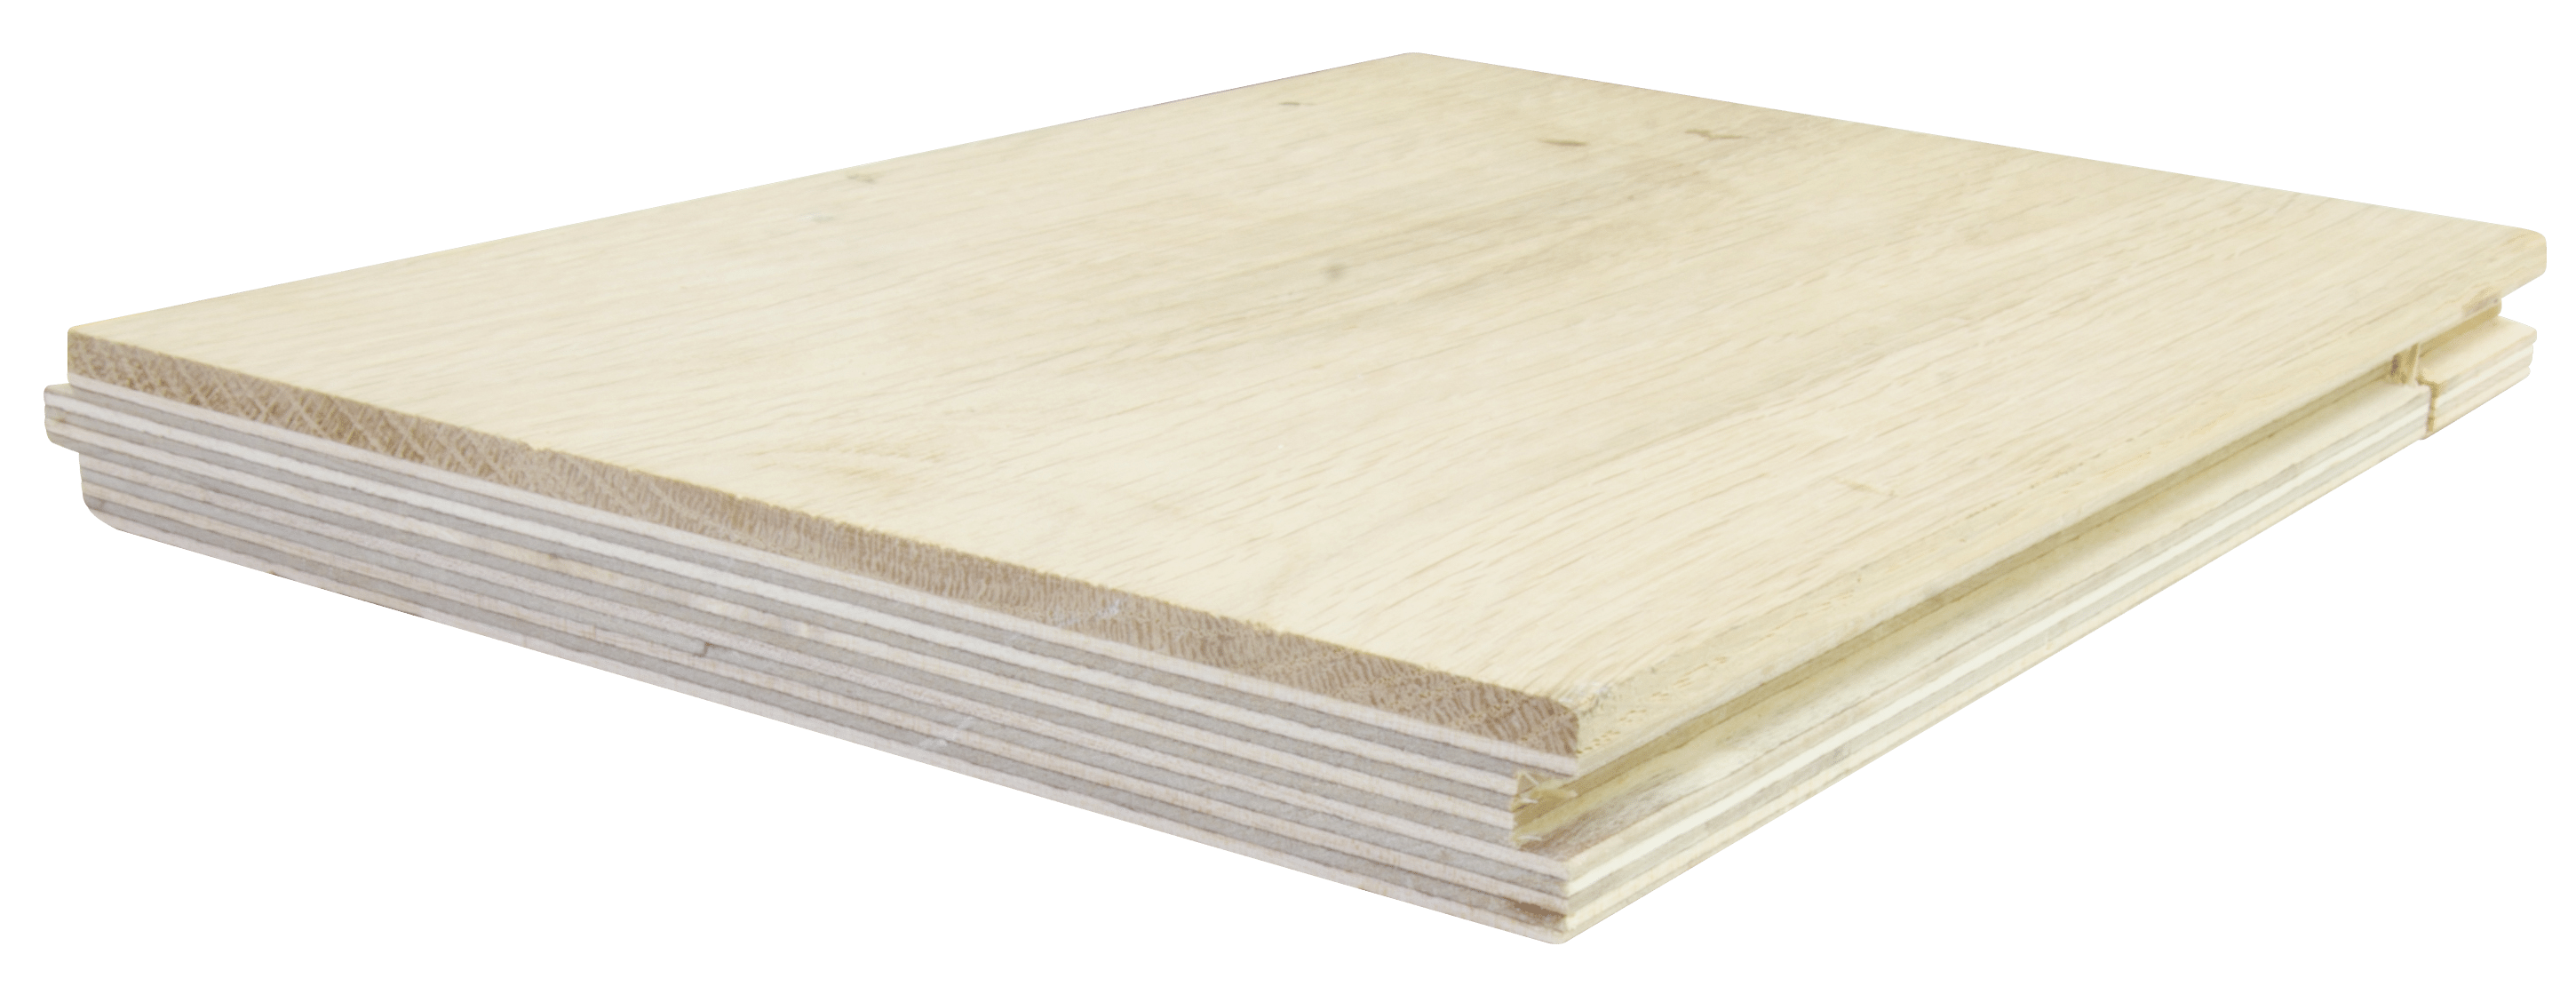 purezawood european white oak engineered hardwood floor